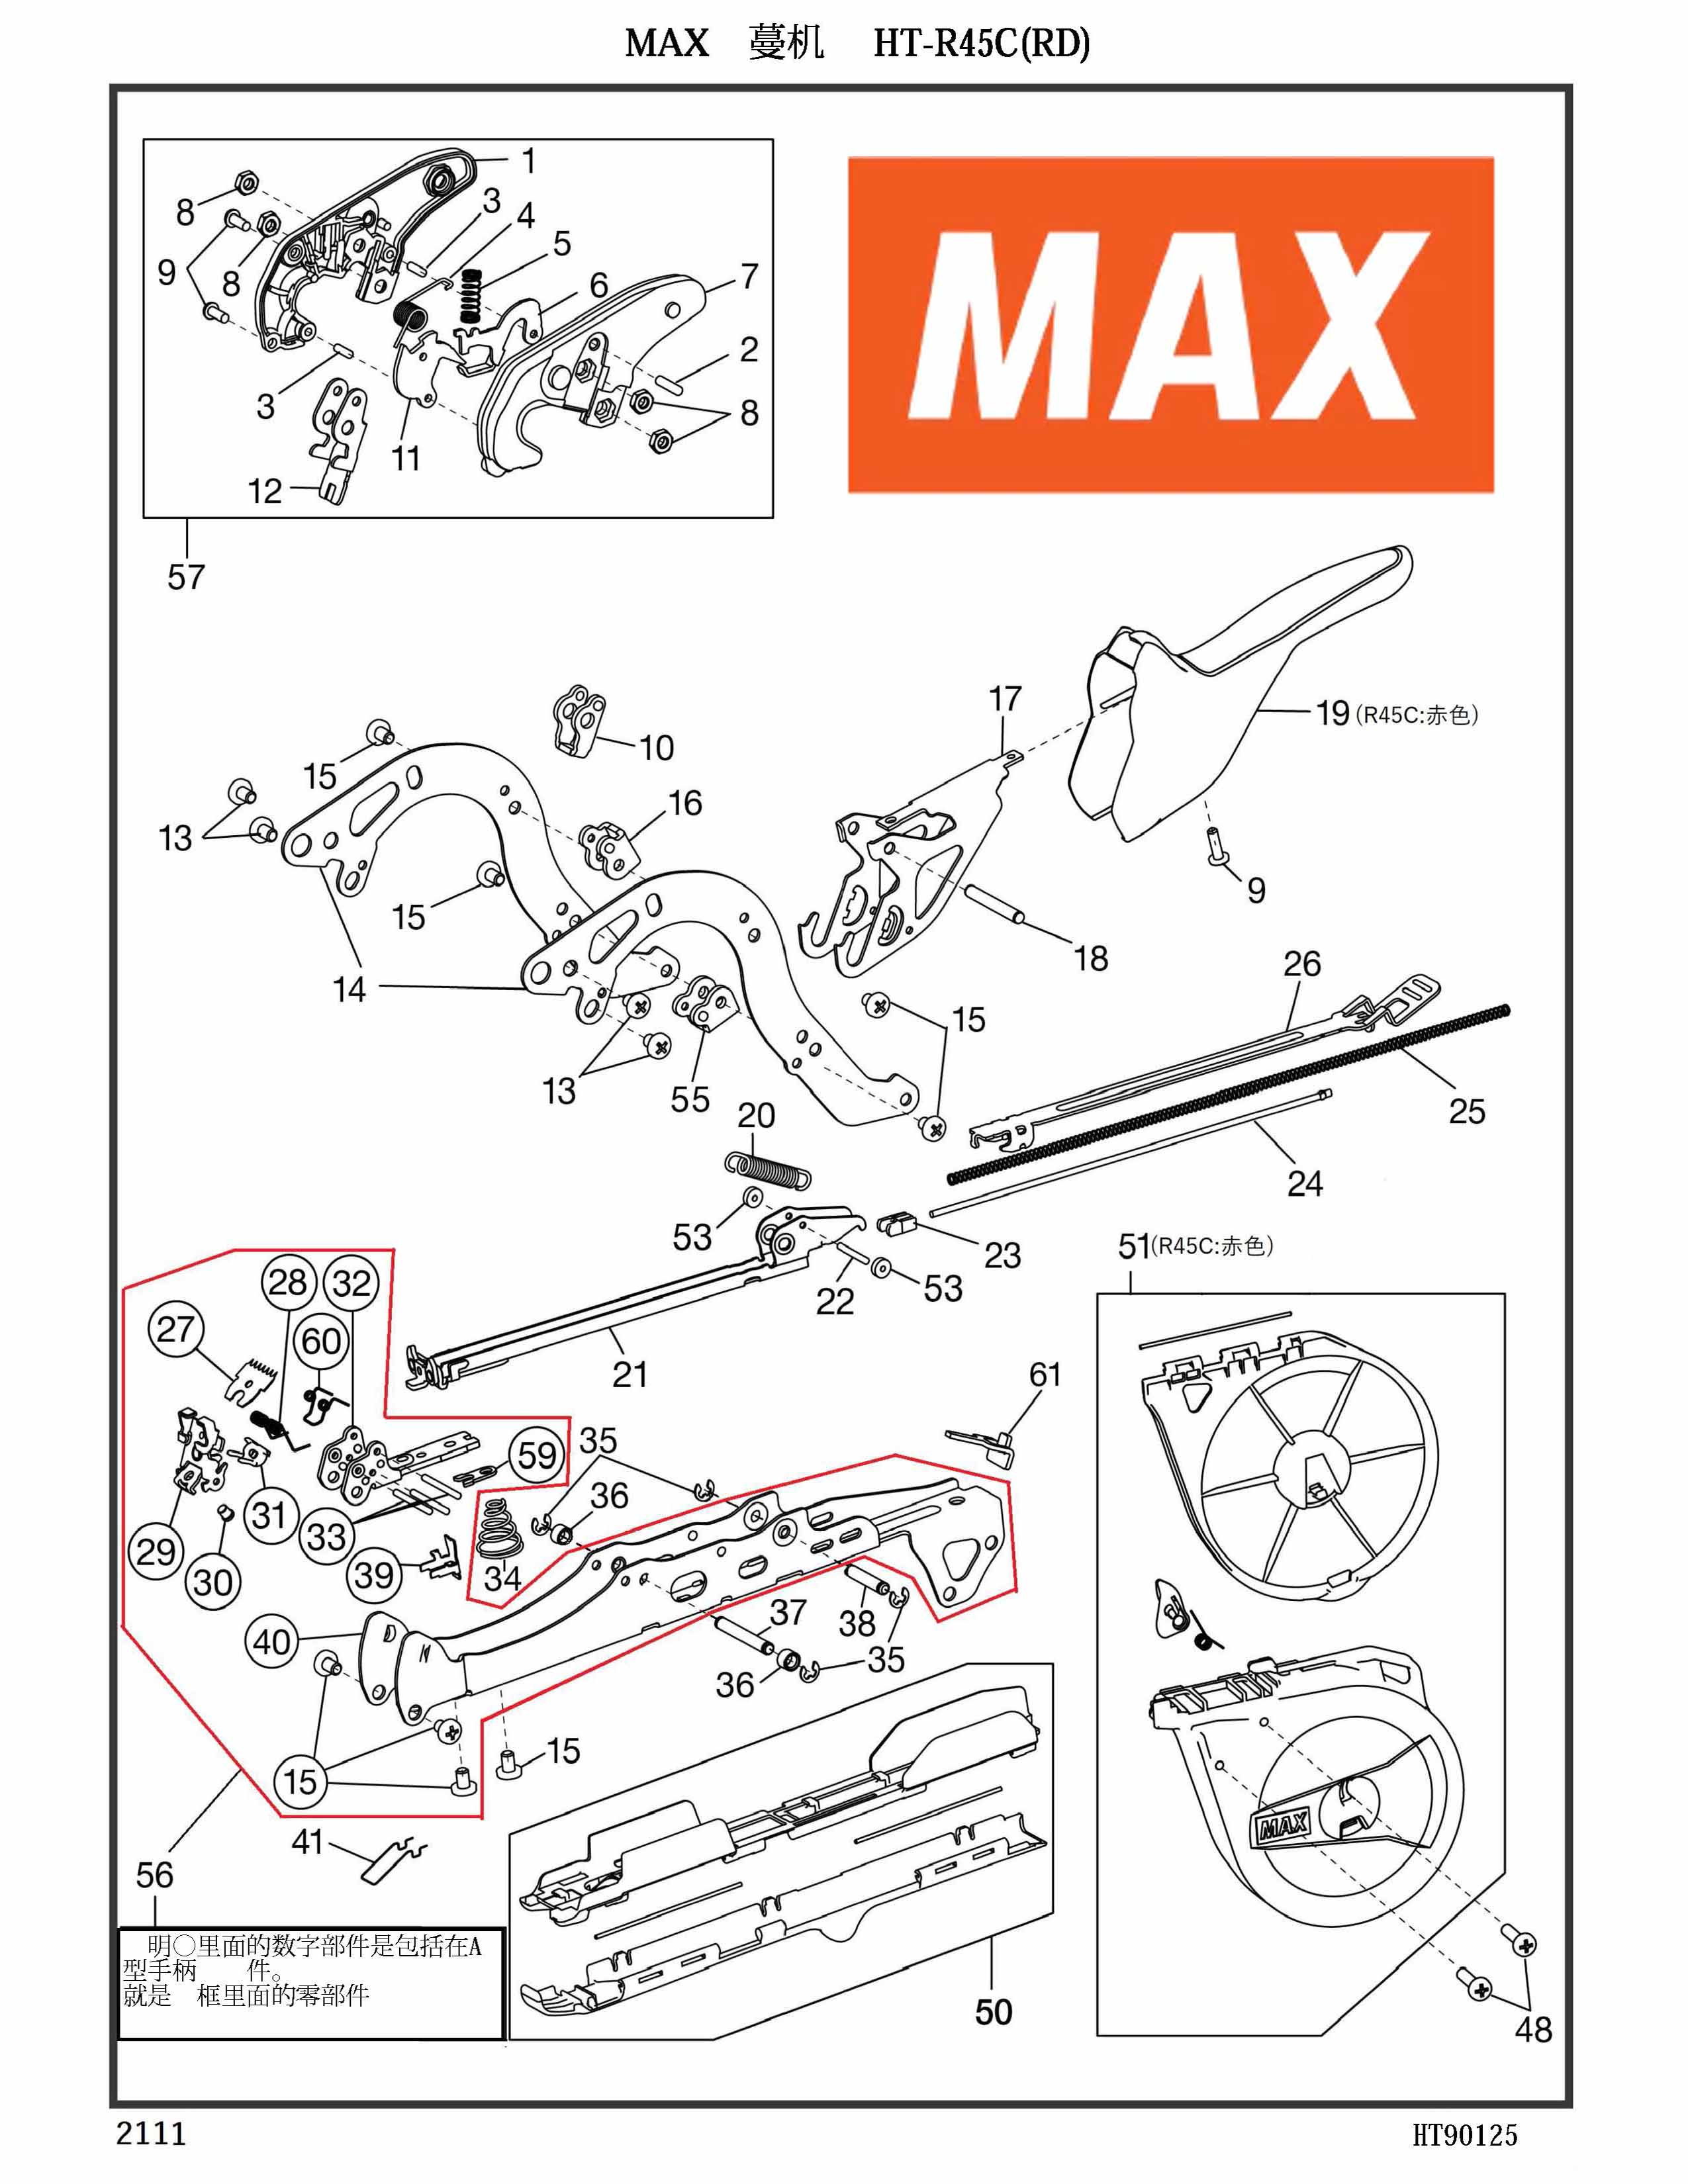 MAX Tapener Part HT70106 MAGAZINE UNIT(R45C) Fits MAX HT-R45L(O) R45C(RD) #21